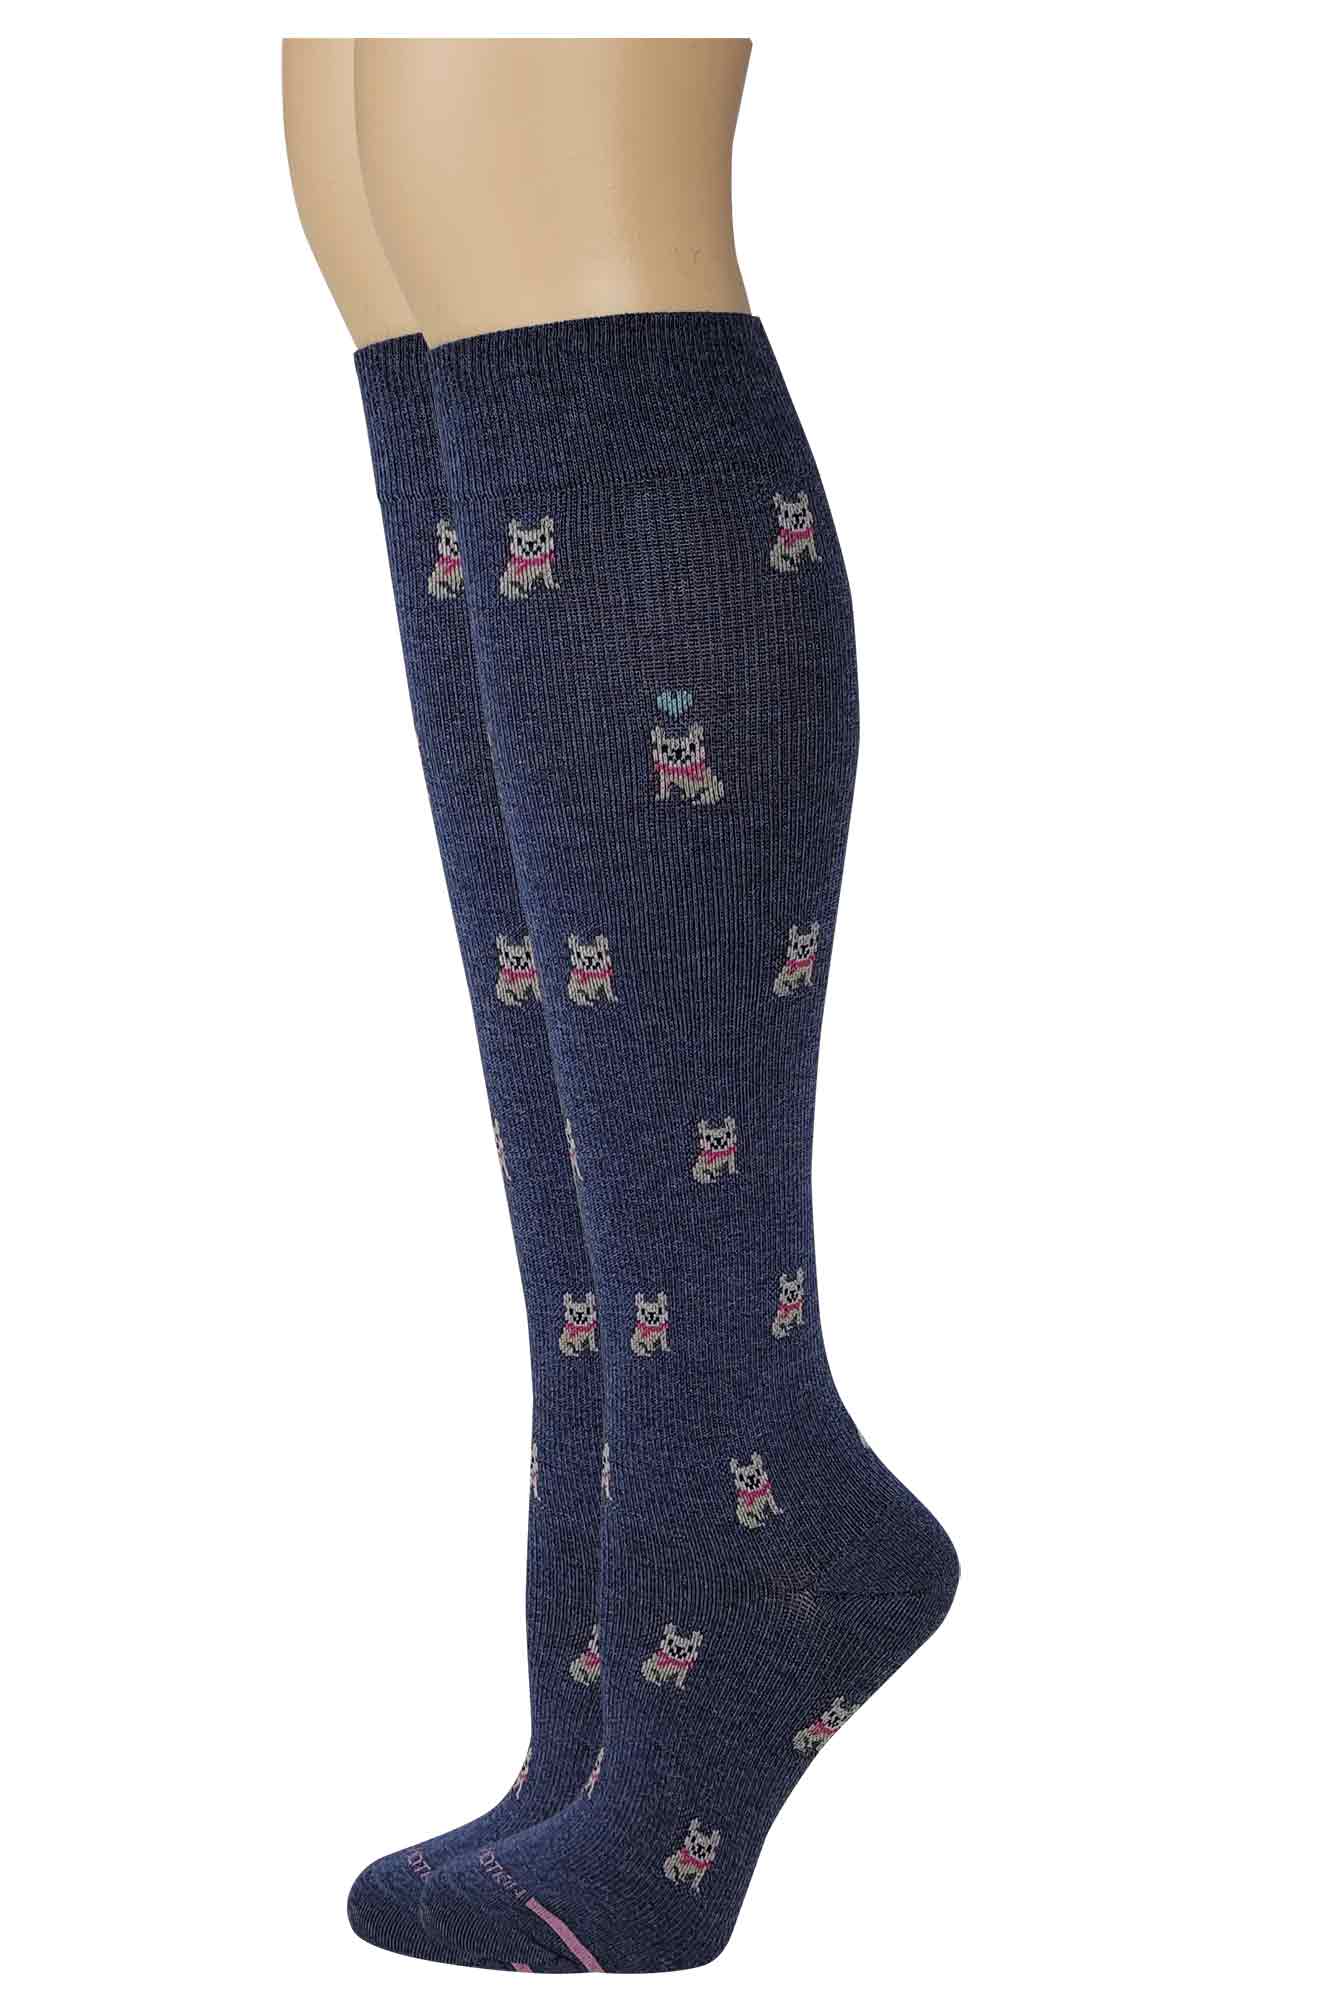 Knee High Compression Socks | Puppy Design | Women's (1 Pair)